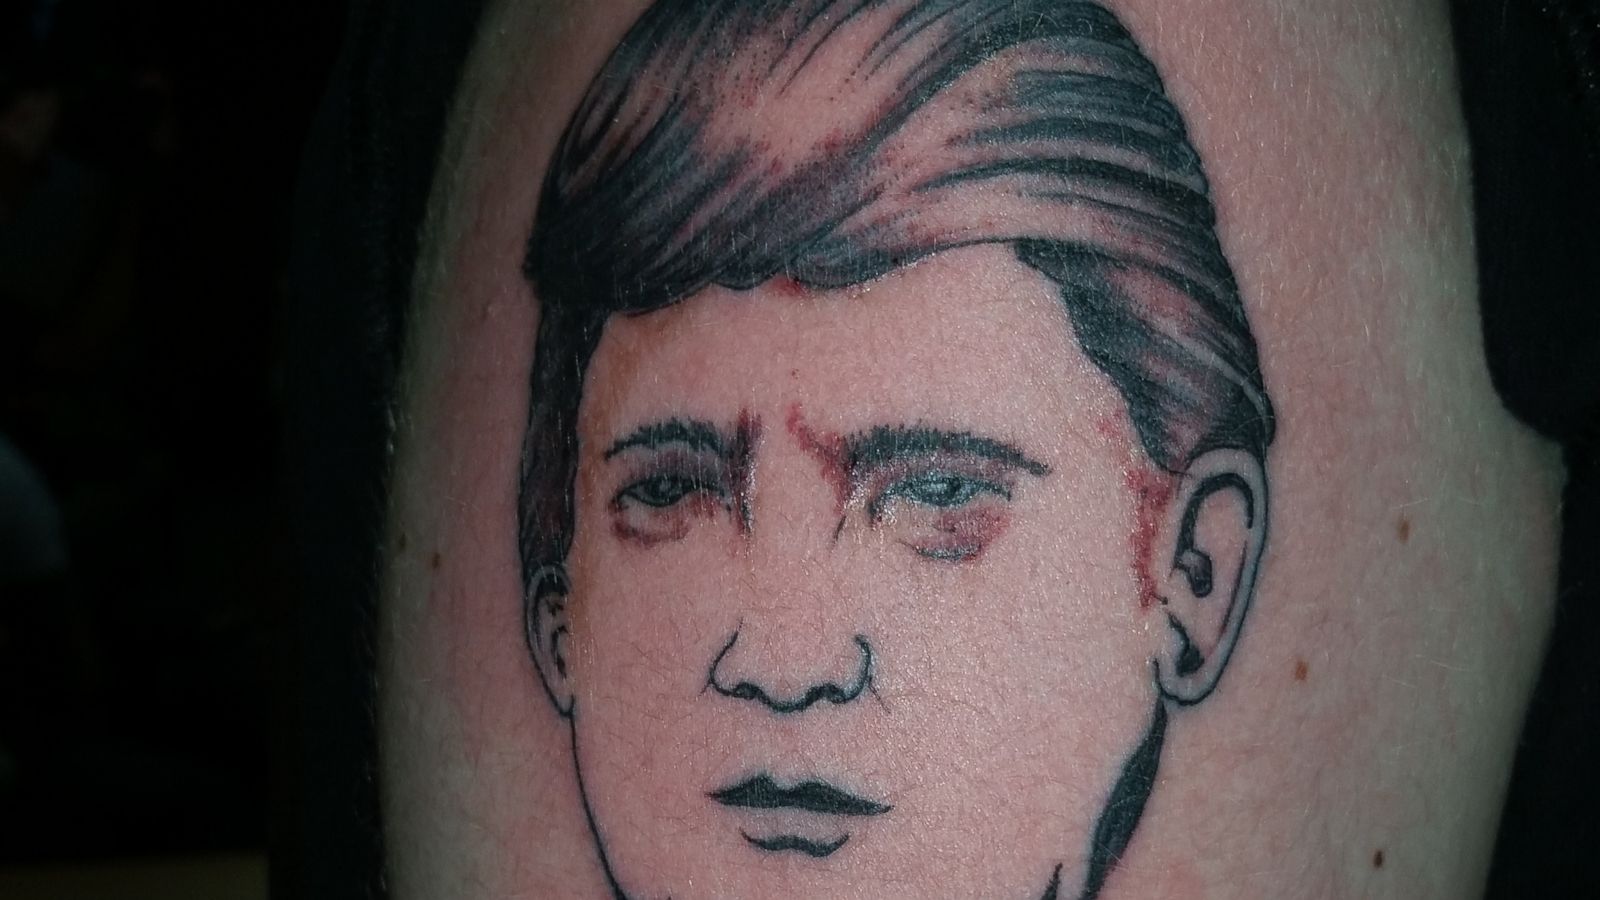 Saving face: Indiana man removing Romney-Ryan tattoo